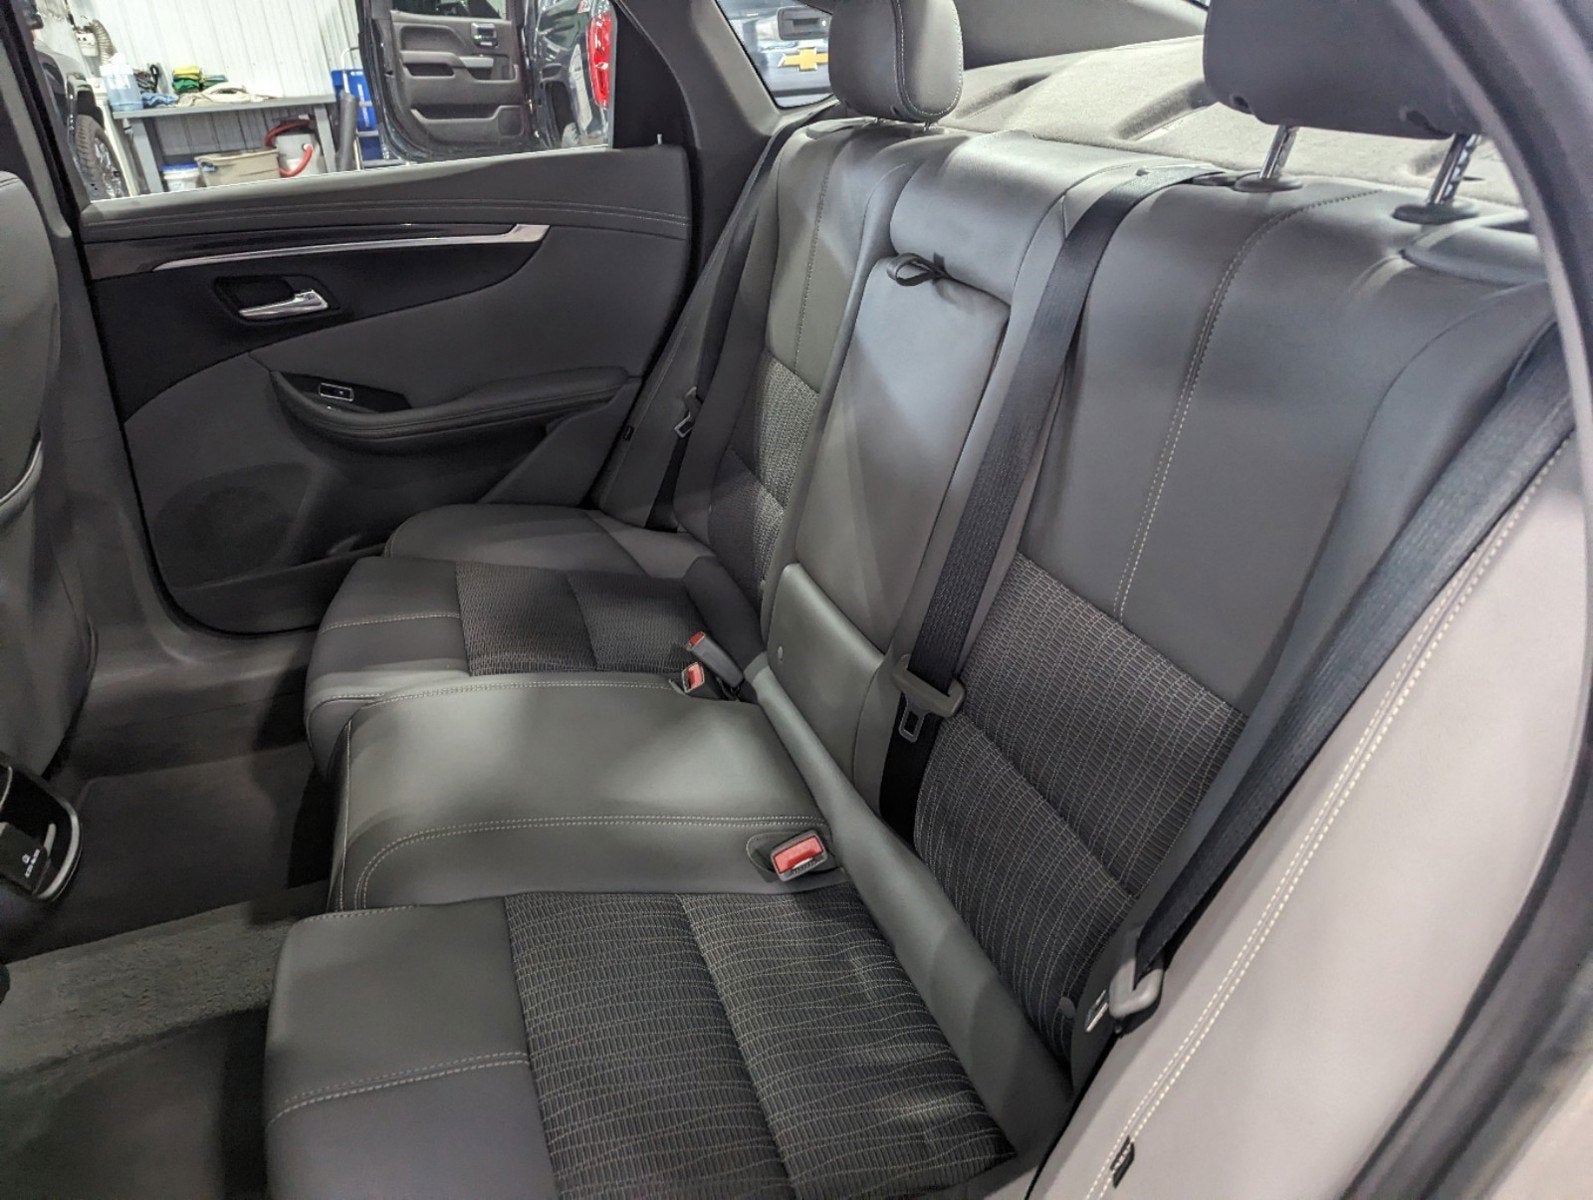 2018 Chevrolet Impala LT Front Wheel Drive Premium Cloth Preferred Equipment Pkg Nav